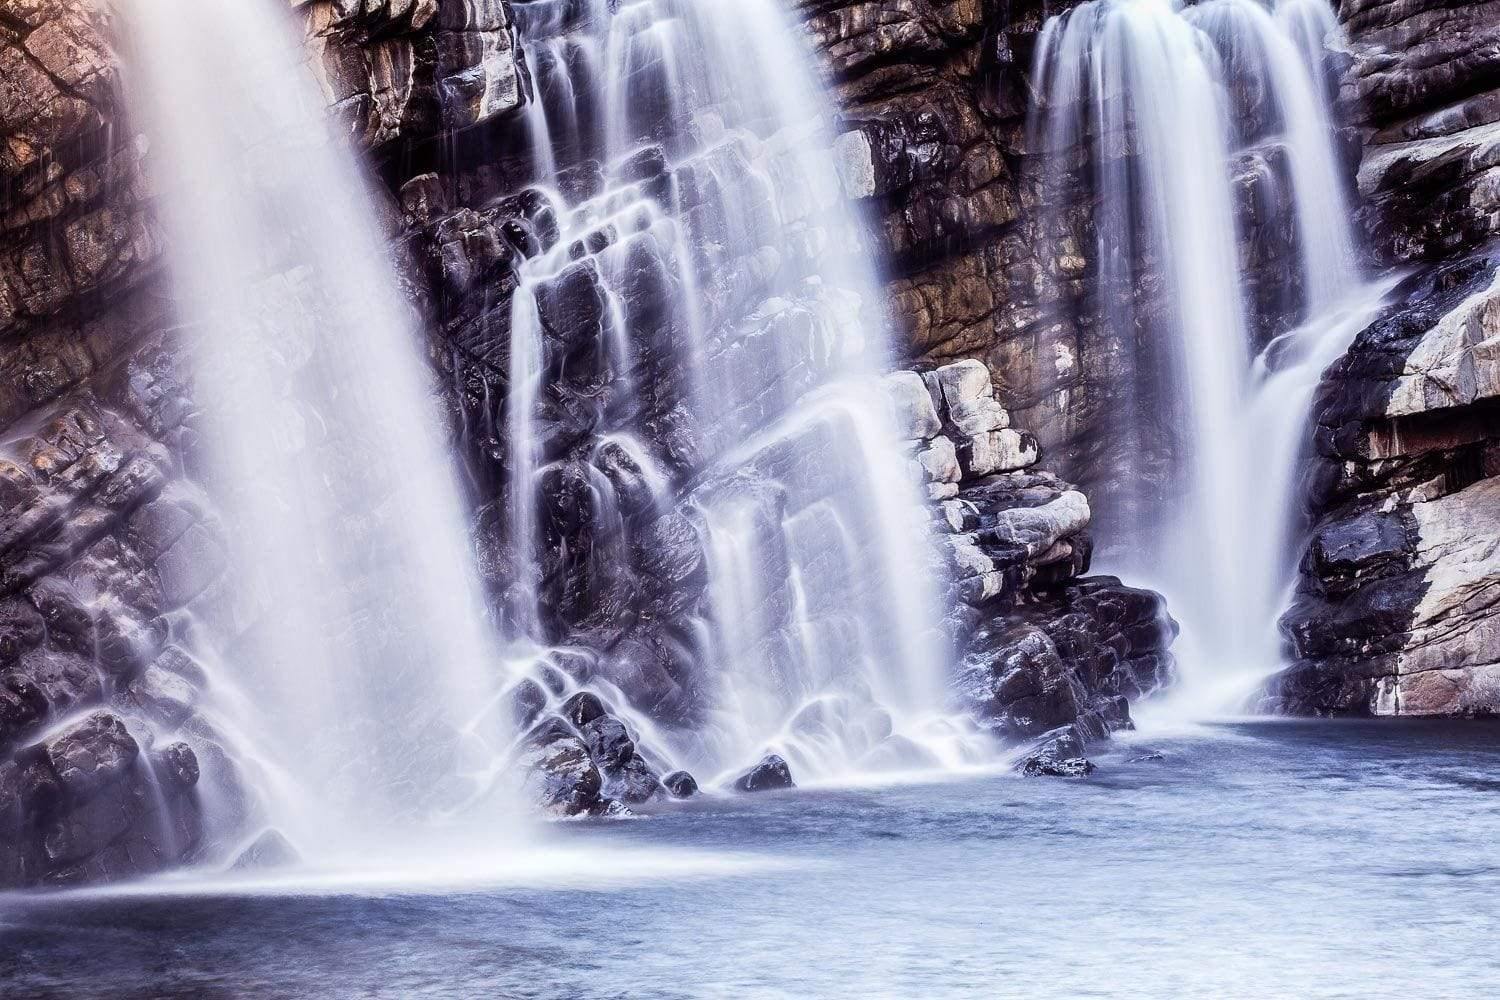 Three waterfalls from a rocky mound into a small lake, Triple Falls - The Kimberley, WA